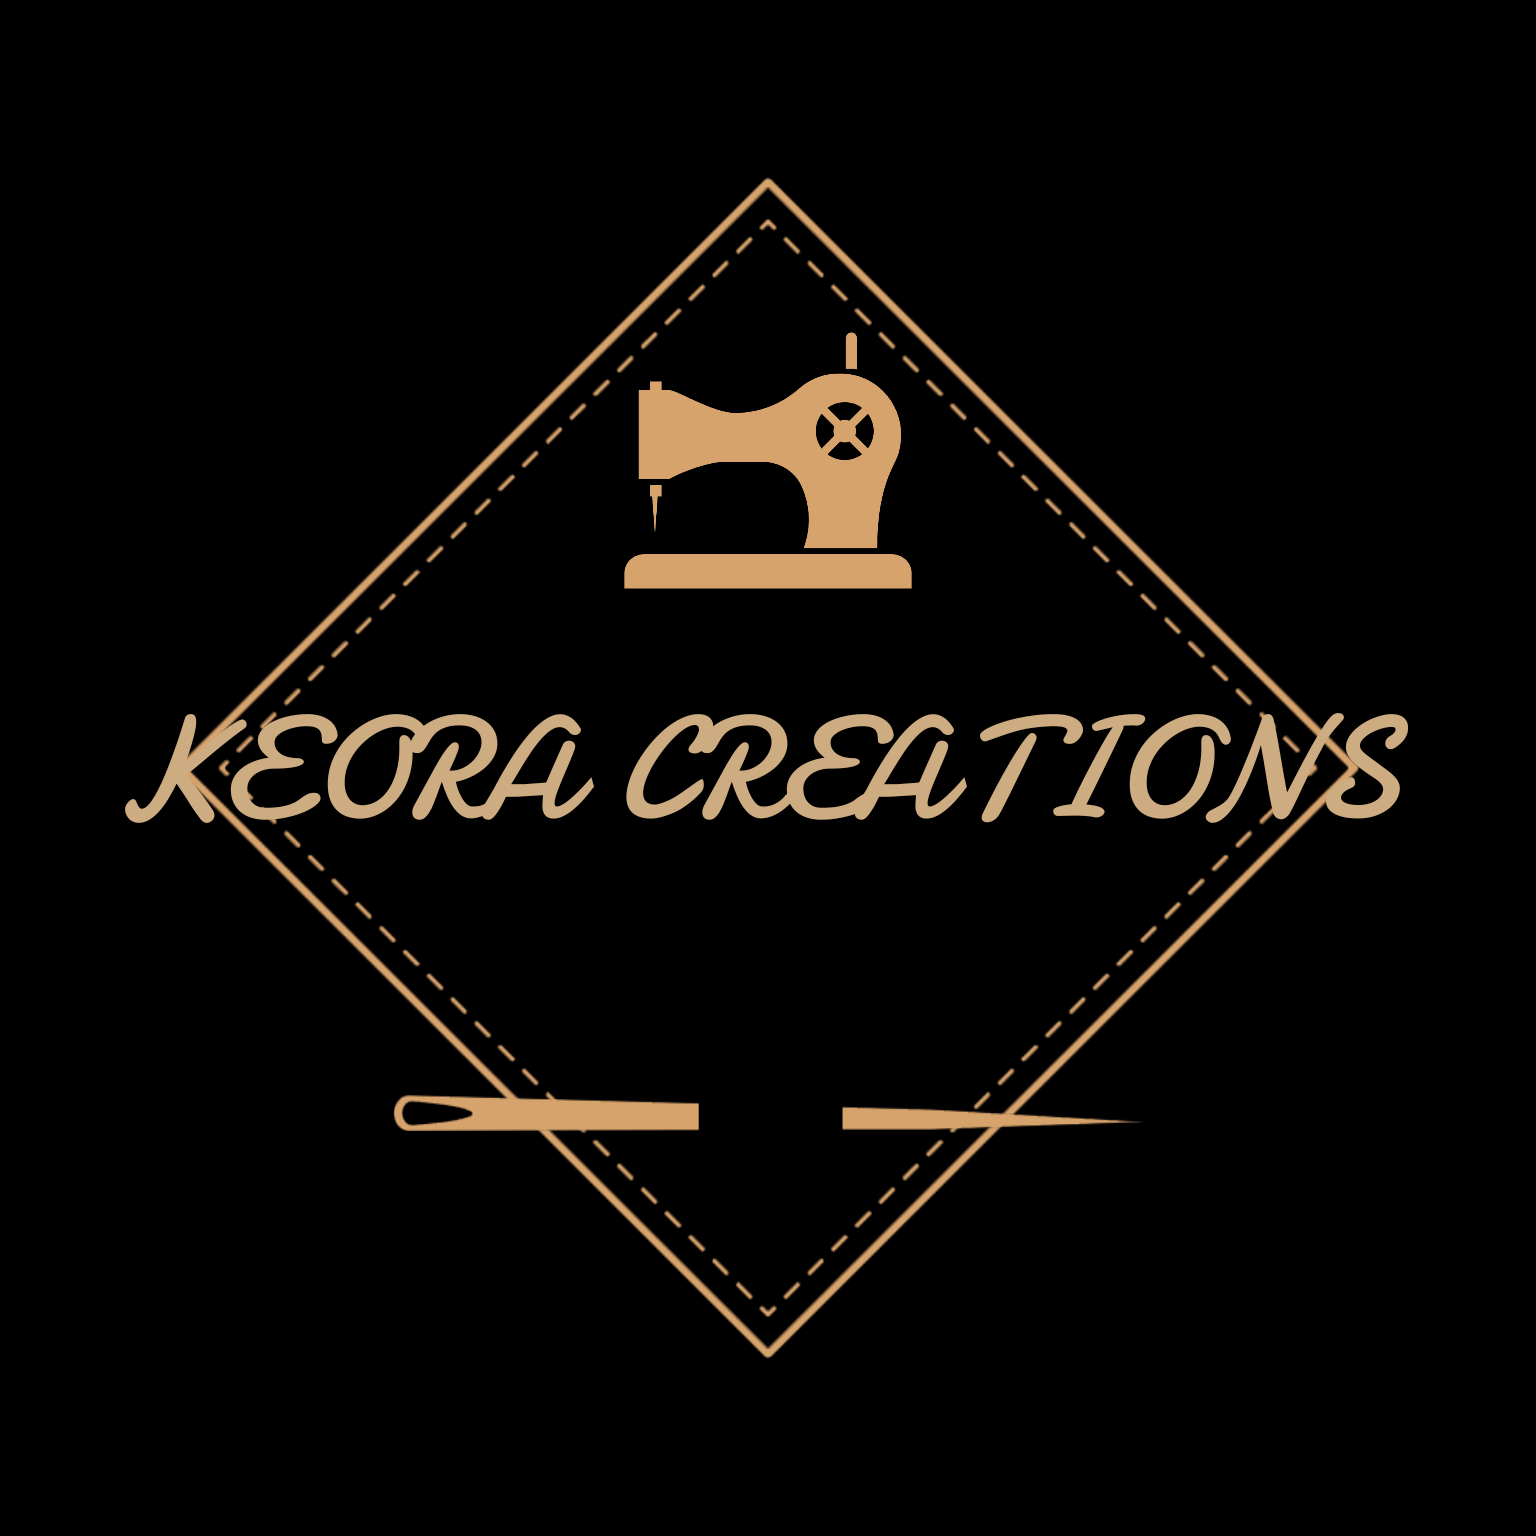 Keora creations 